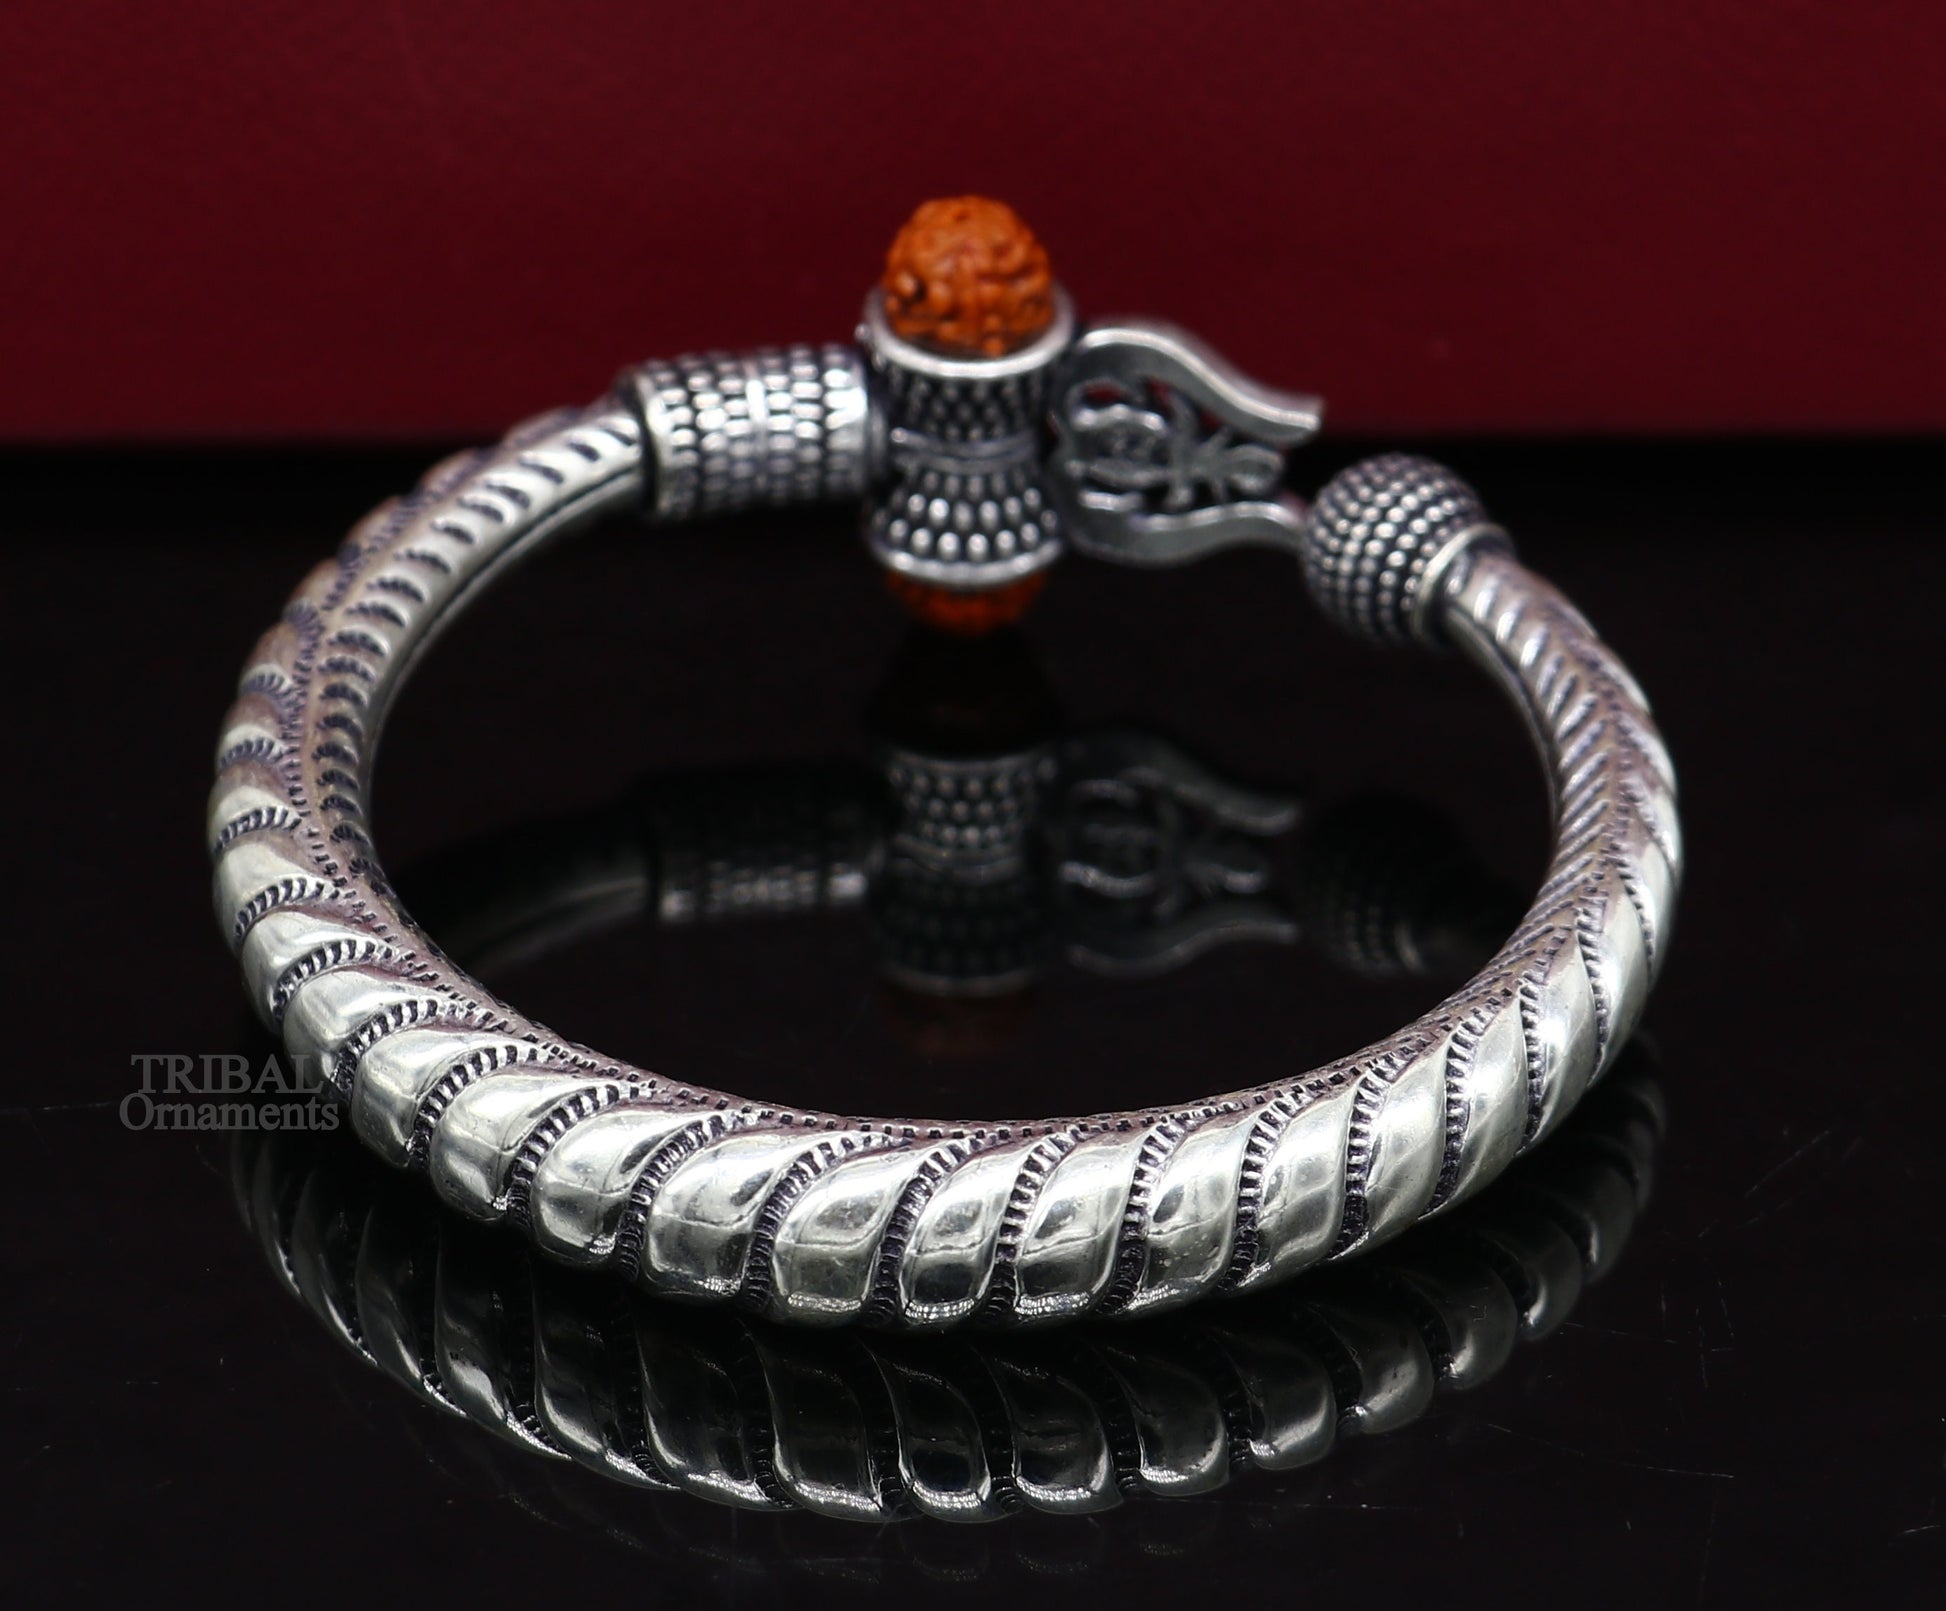 Exclusive 925 Sterling silver handmade chitai work Lord Shiva trident trishul bangle bracelet natural Rudraksha beads customized kada nsk440 - TRIBAL ORNAMENTS